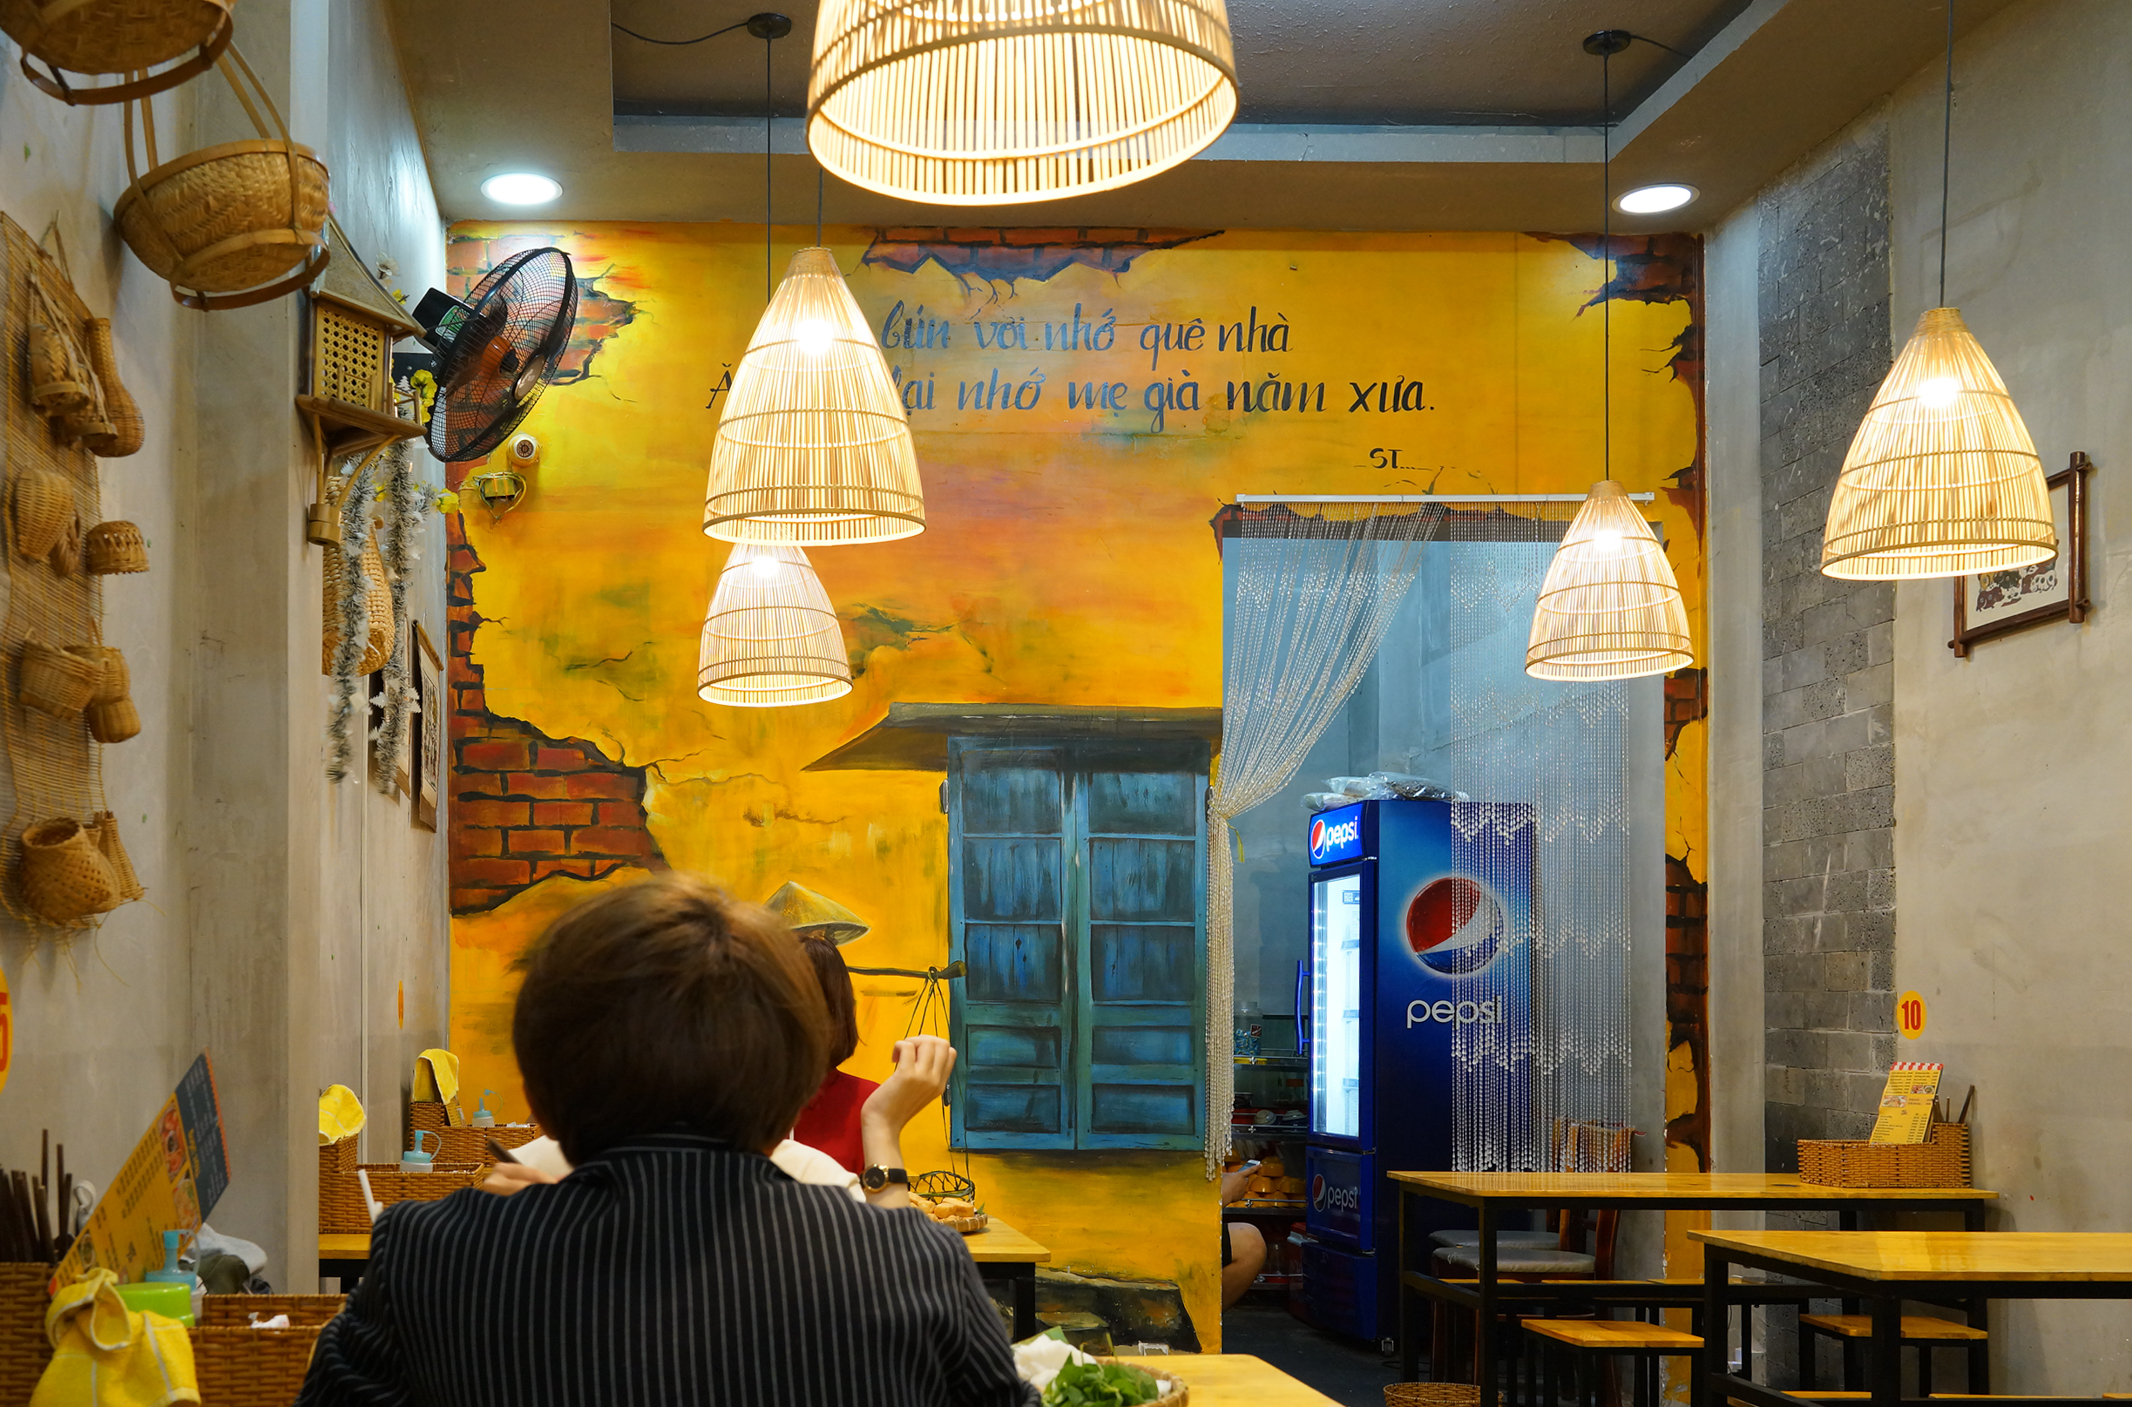 Bun dau mam tom restaurants in Saigon tend to have a northern-style decor. Photo: Tien Bui